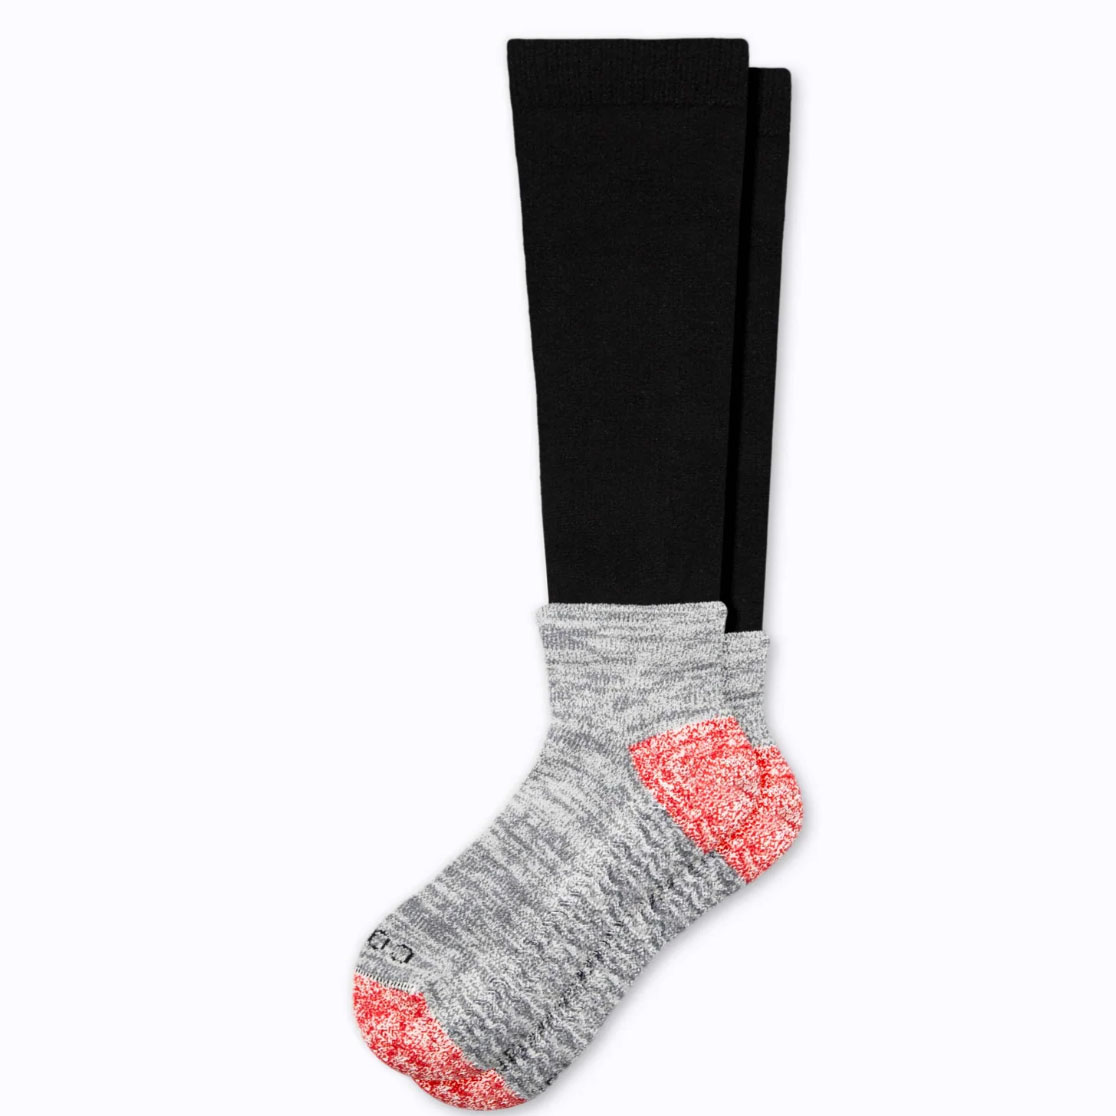 Grey and black compression socks